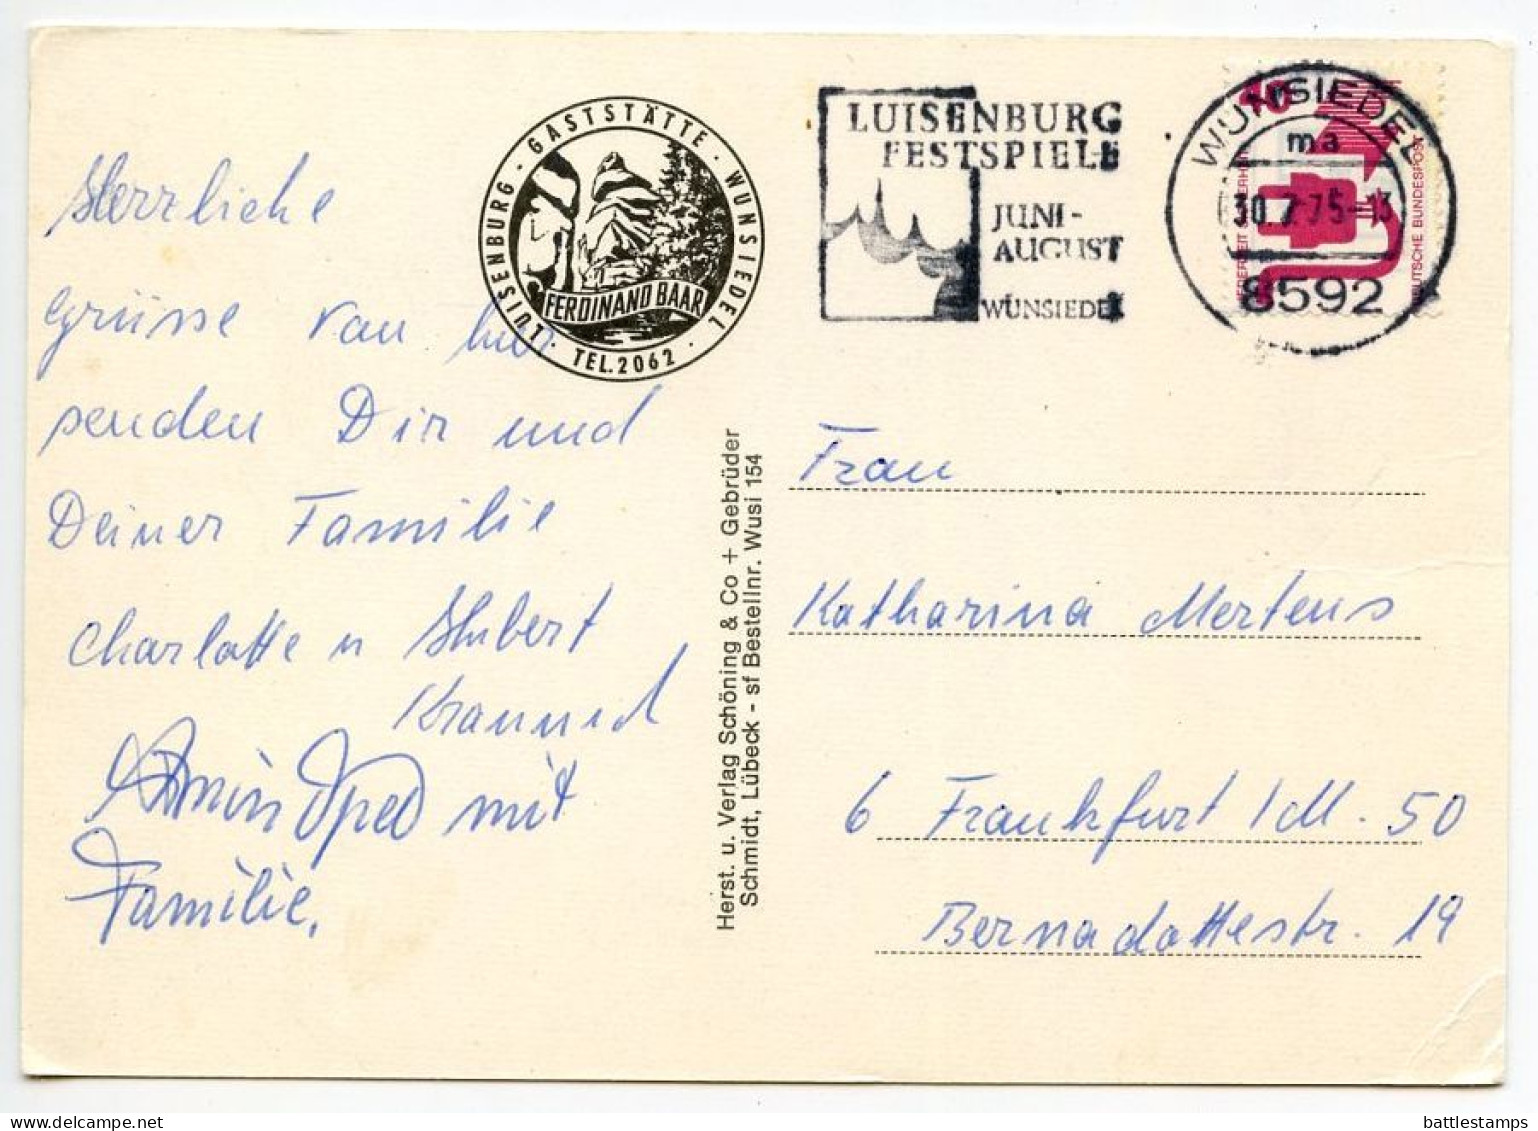 Germany, West 1974 Postcard Luisenburg, Fichtelgebirge - Europas Grösstes Felsenlabyrinth; Wunsiedel Slogan Cancel - Wunsiedel